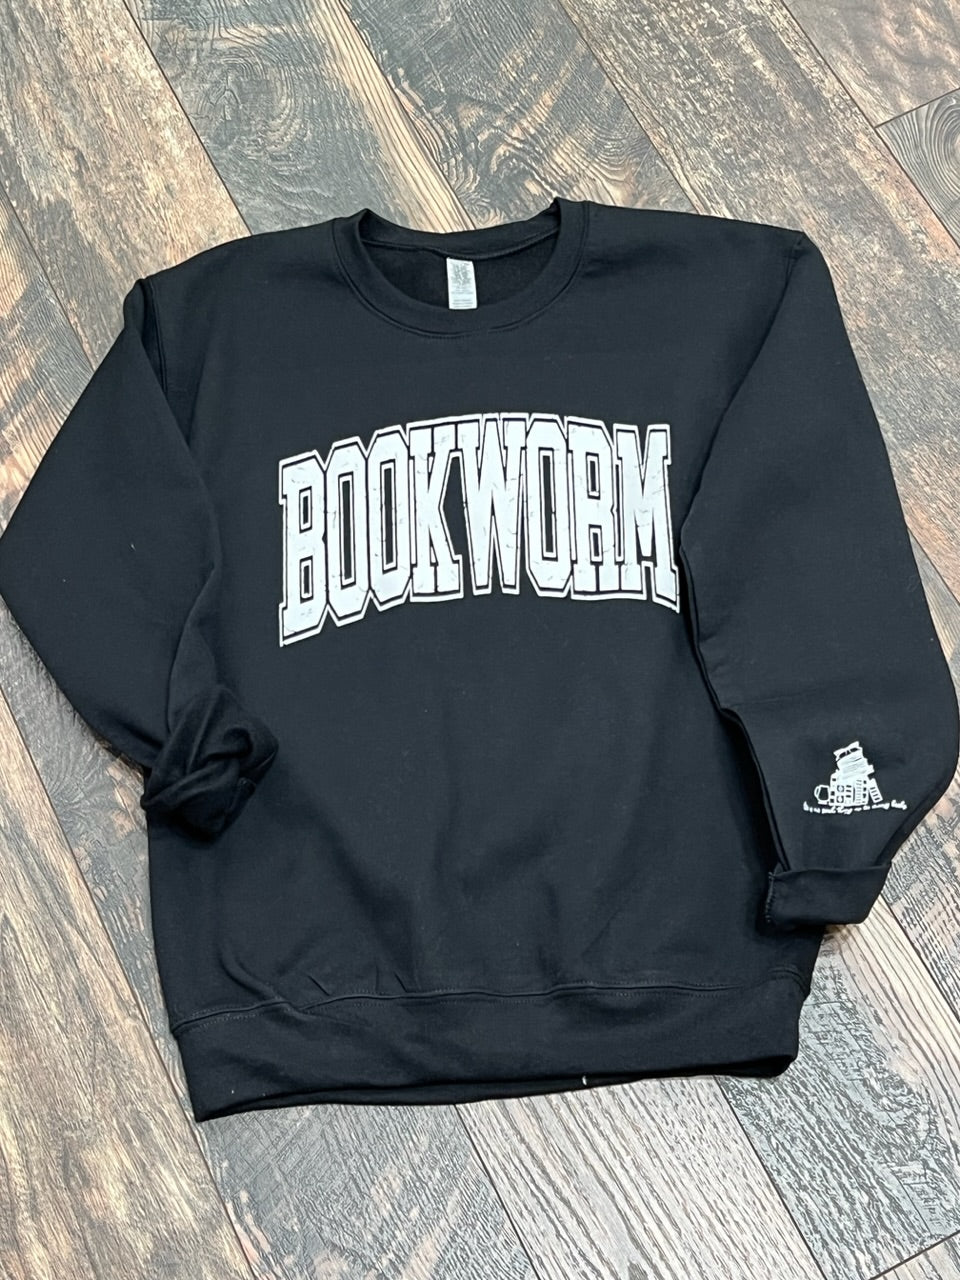 bookworm sweatshirt